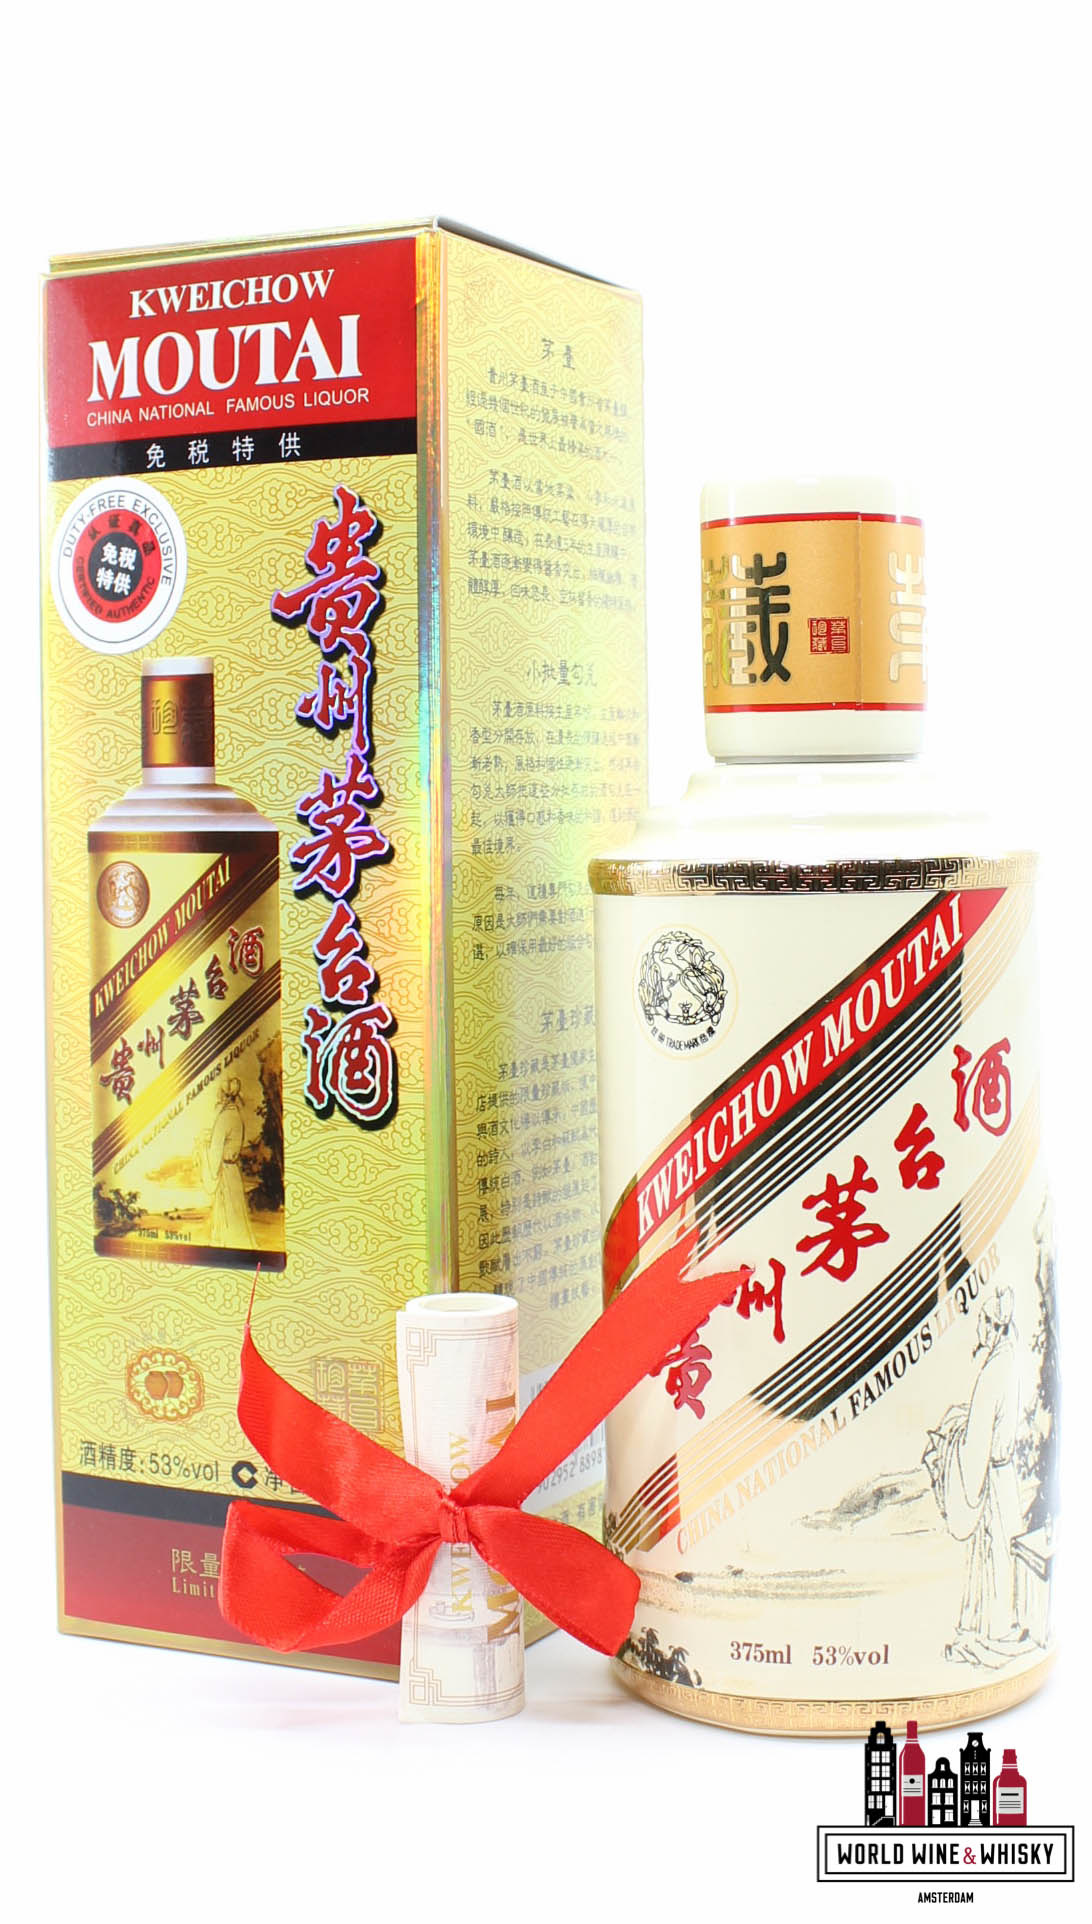 Kweichow Moutai Kweichow Moutai Legendary Libai - Duty Free Exclusive 53% 375ml (National Famous Liquor of China)